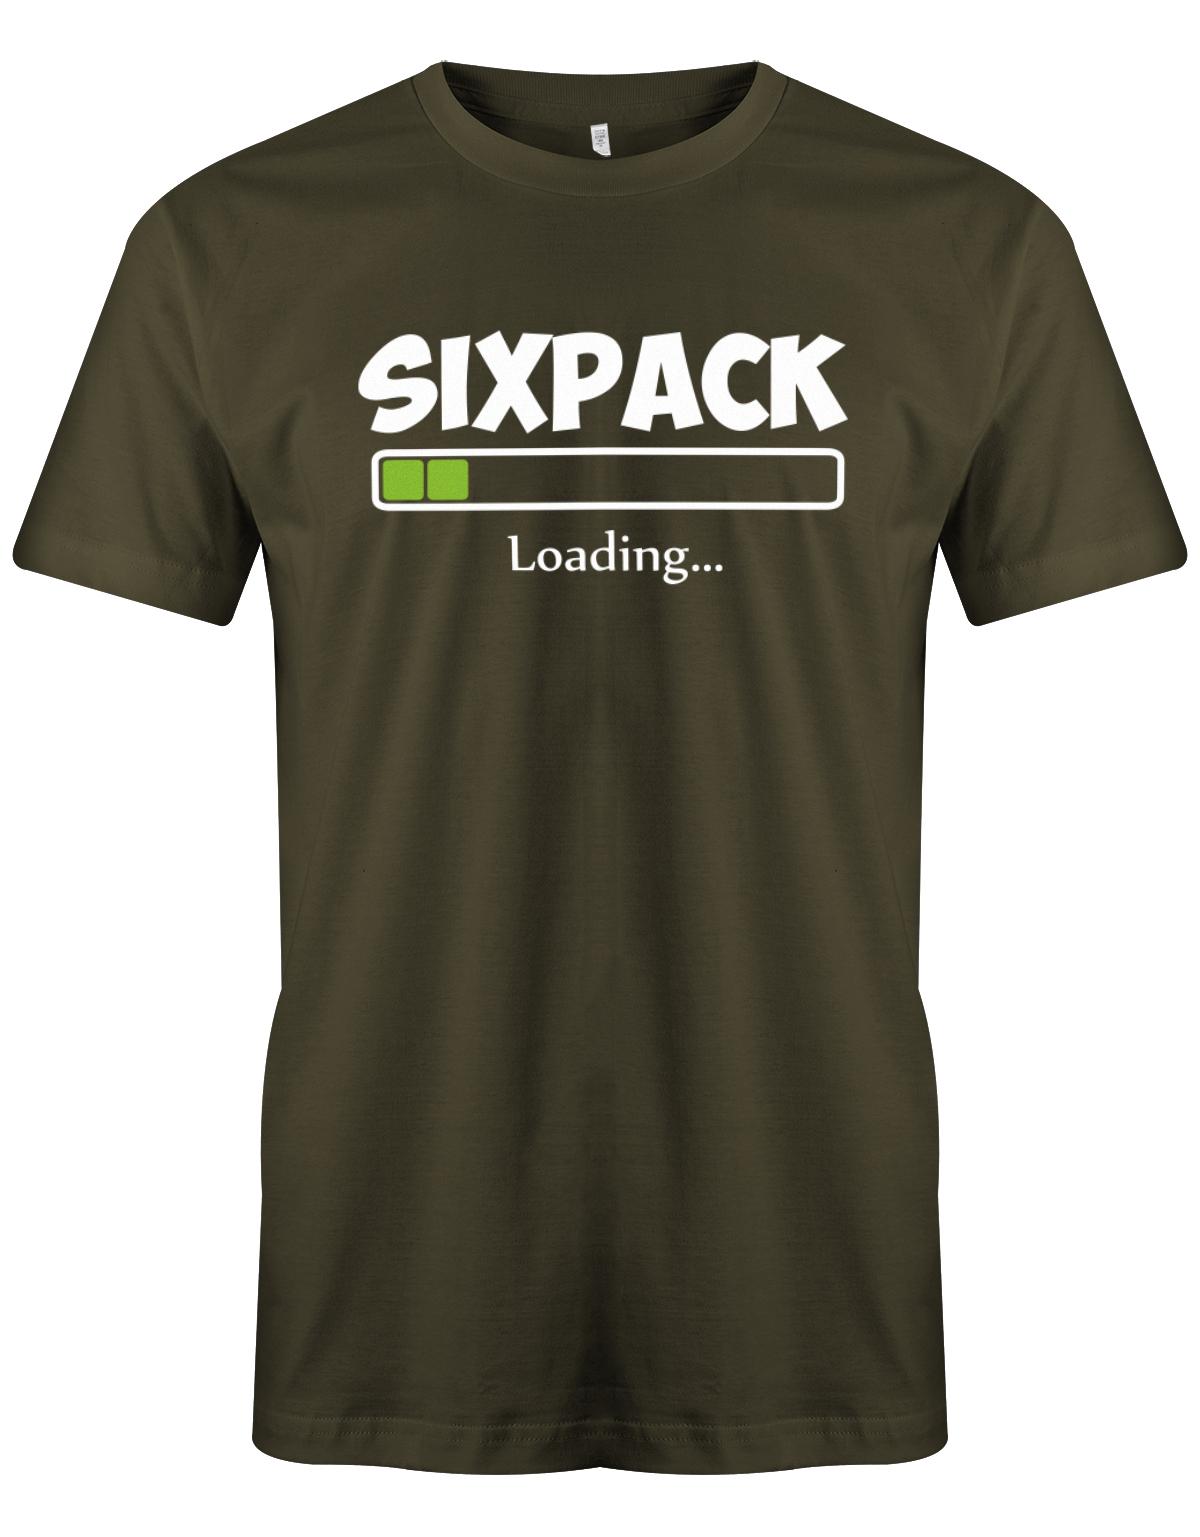 Sixpack-loading-Herren-Shirt-Army